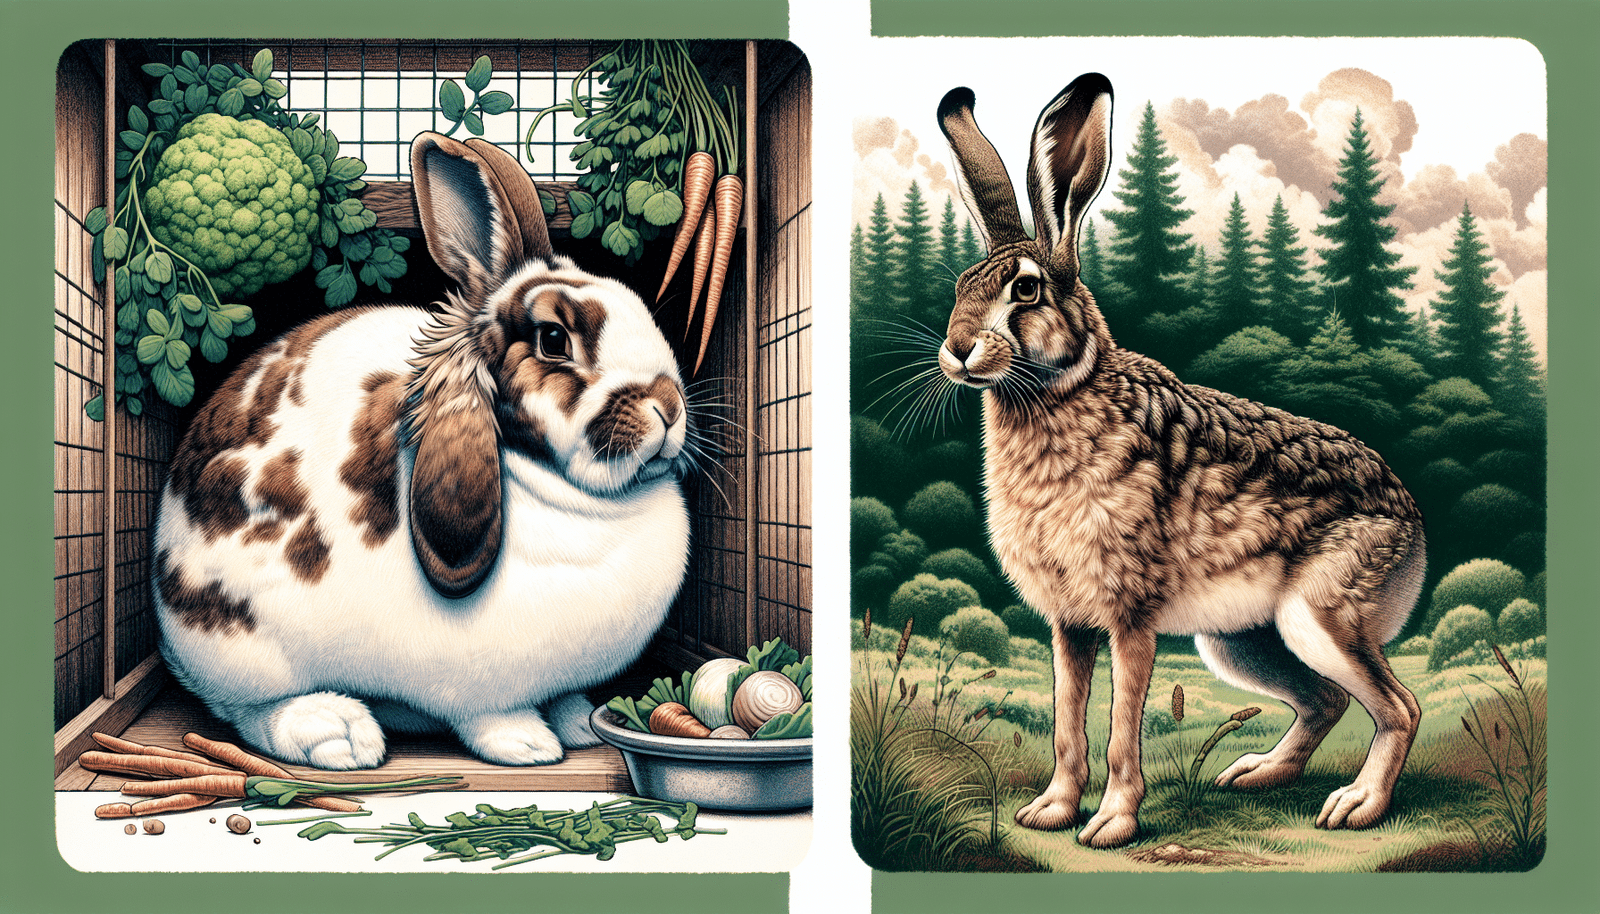 Illustration comparing domestic and wild rabbits